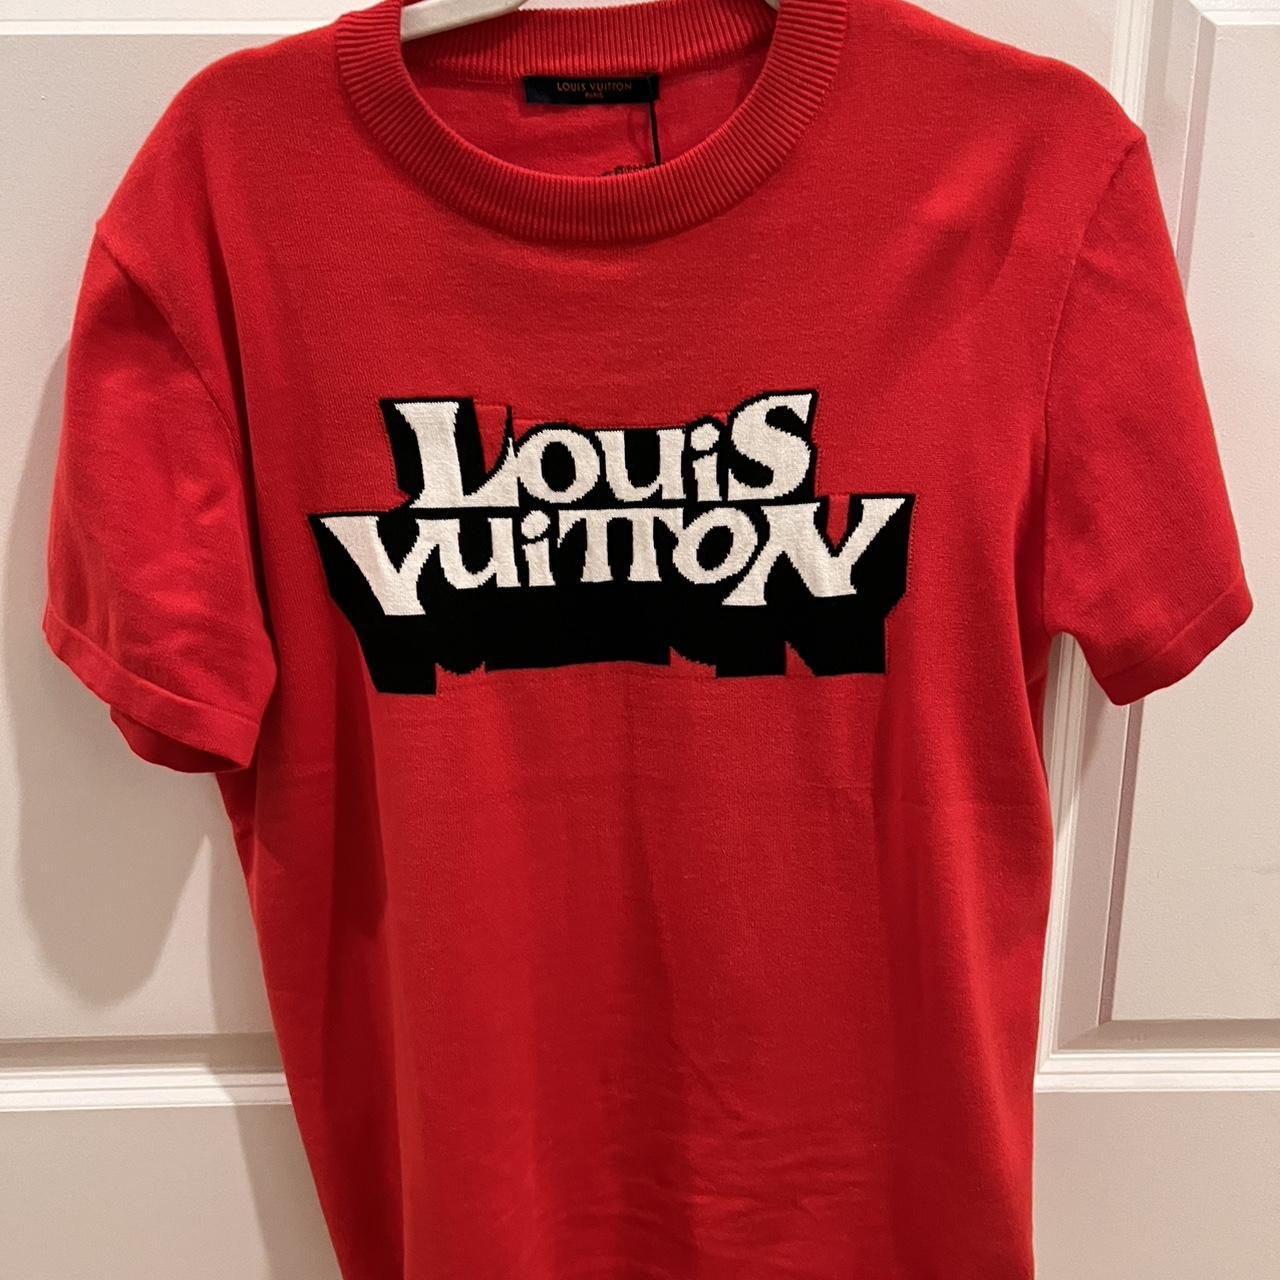 Louis Vuitton Logo LV Damier TShirt Tops Men S Red Regular Fit From Japan  New  eBay